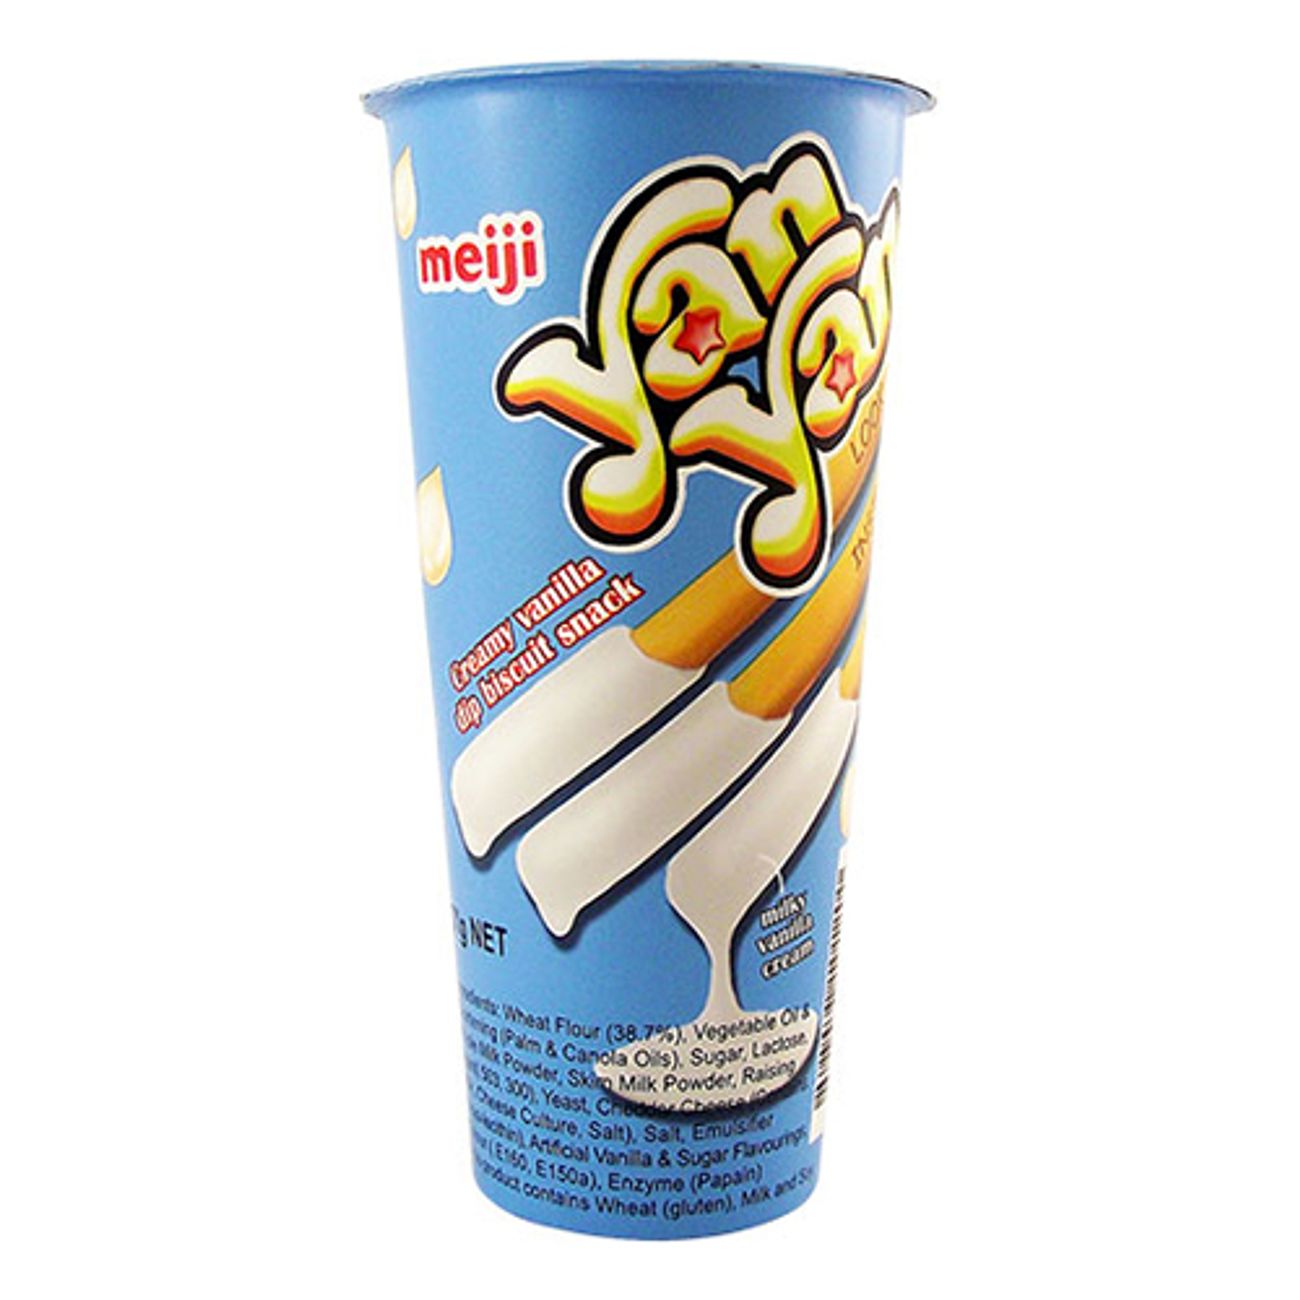 meiji-yan-yan-creamy-vanilla-dip-biscuit-snack-1